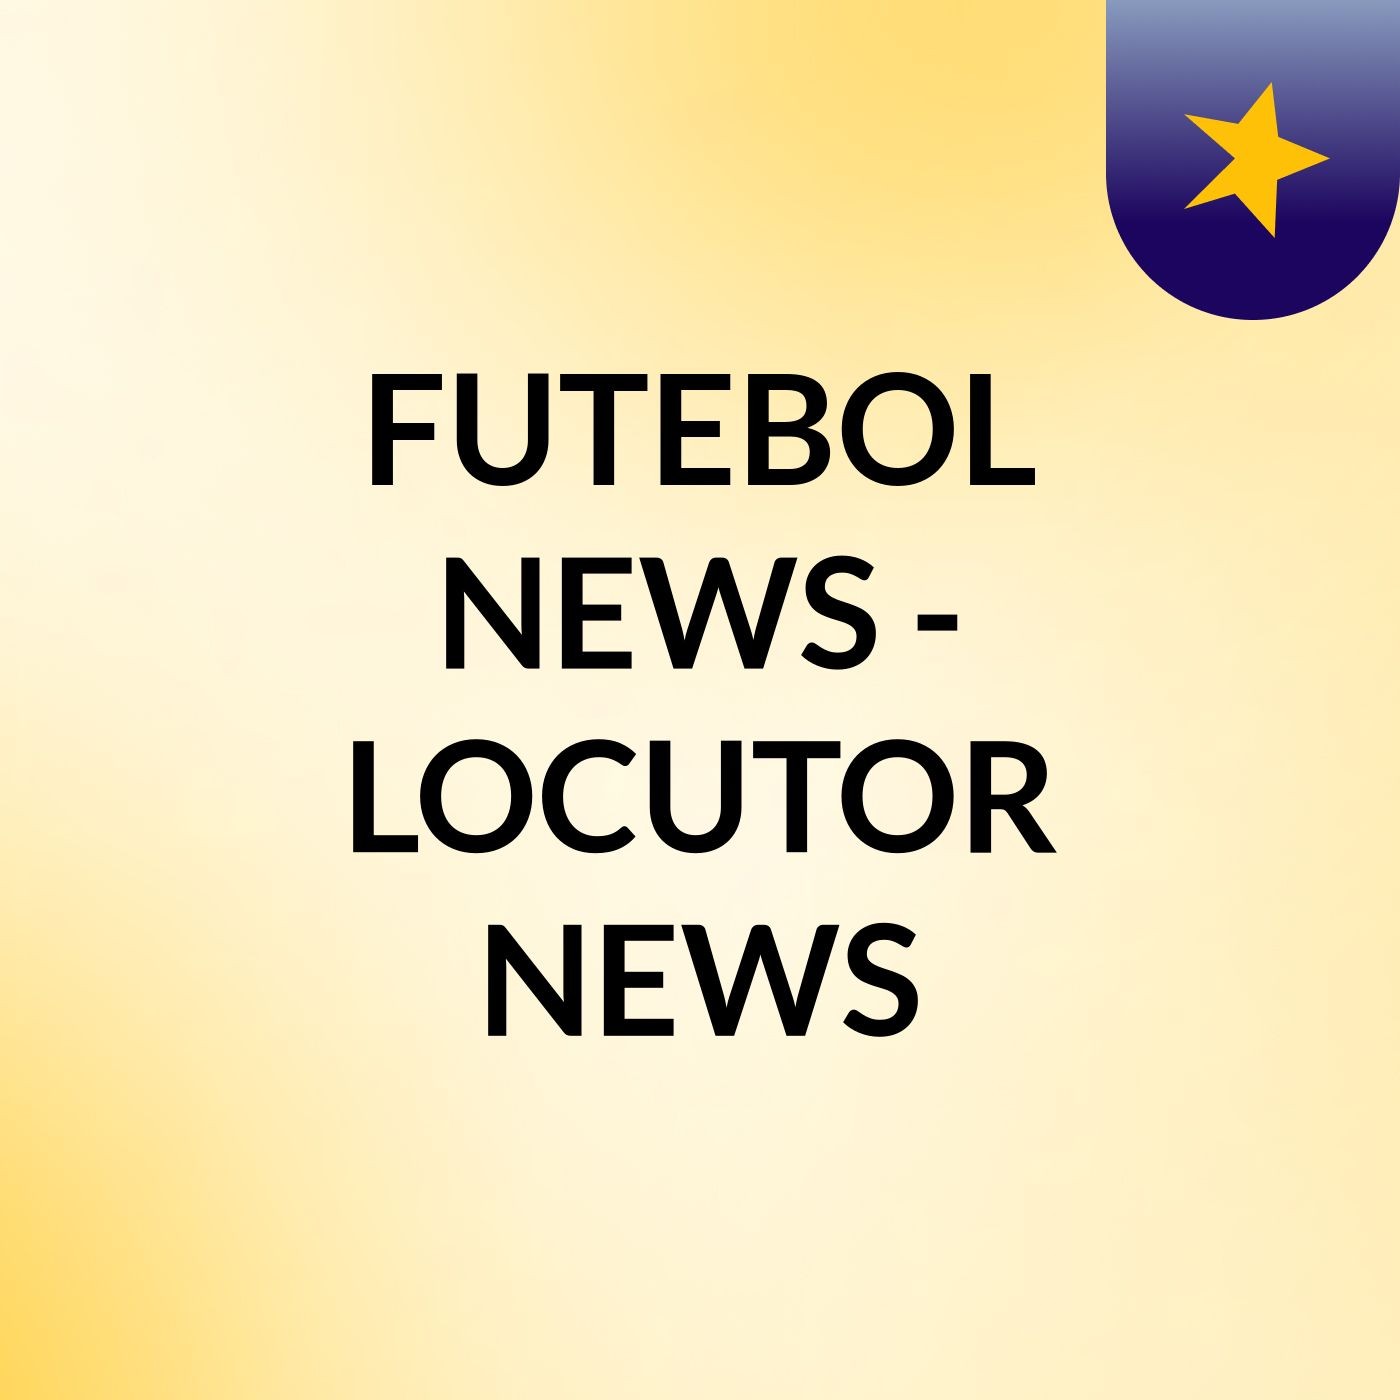 FUTEBOL NEWS - LOCUTOR NEWS